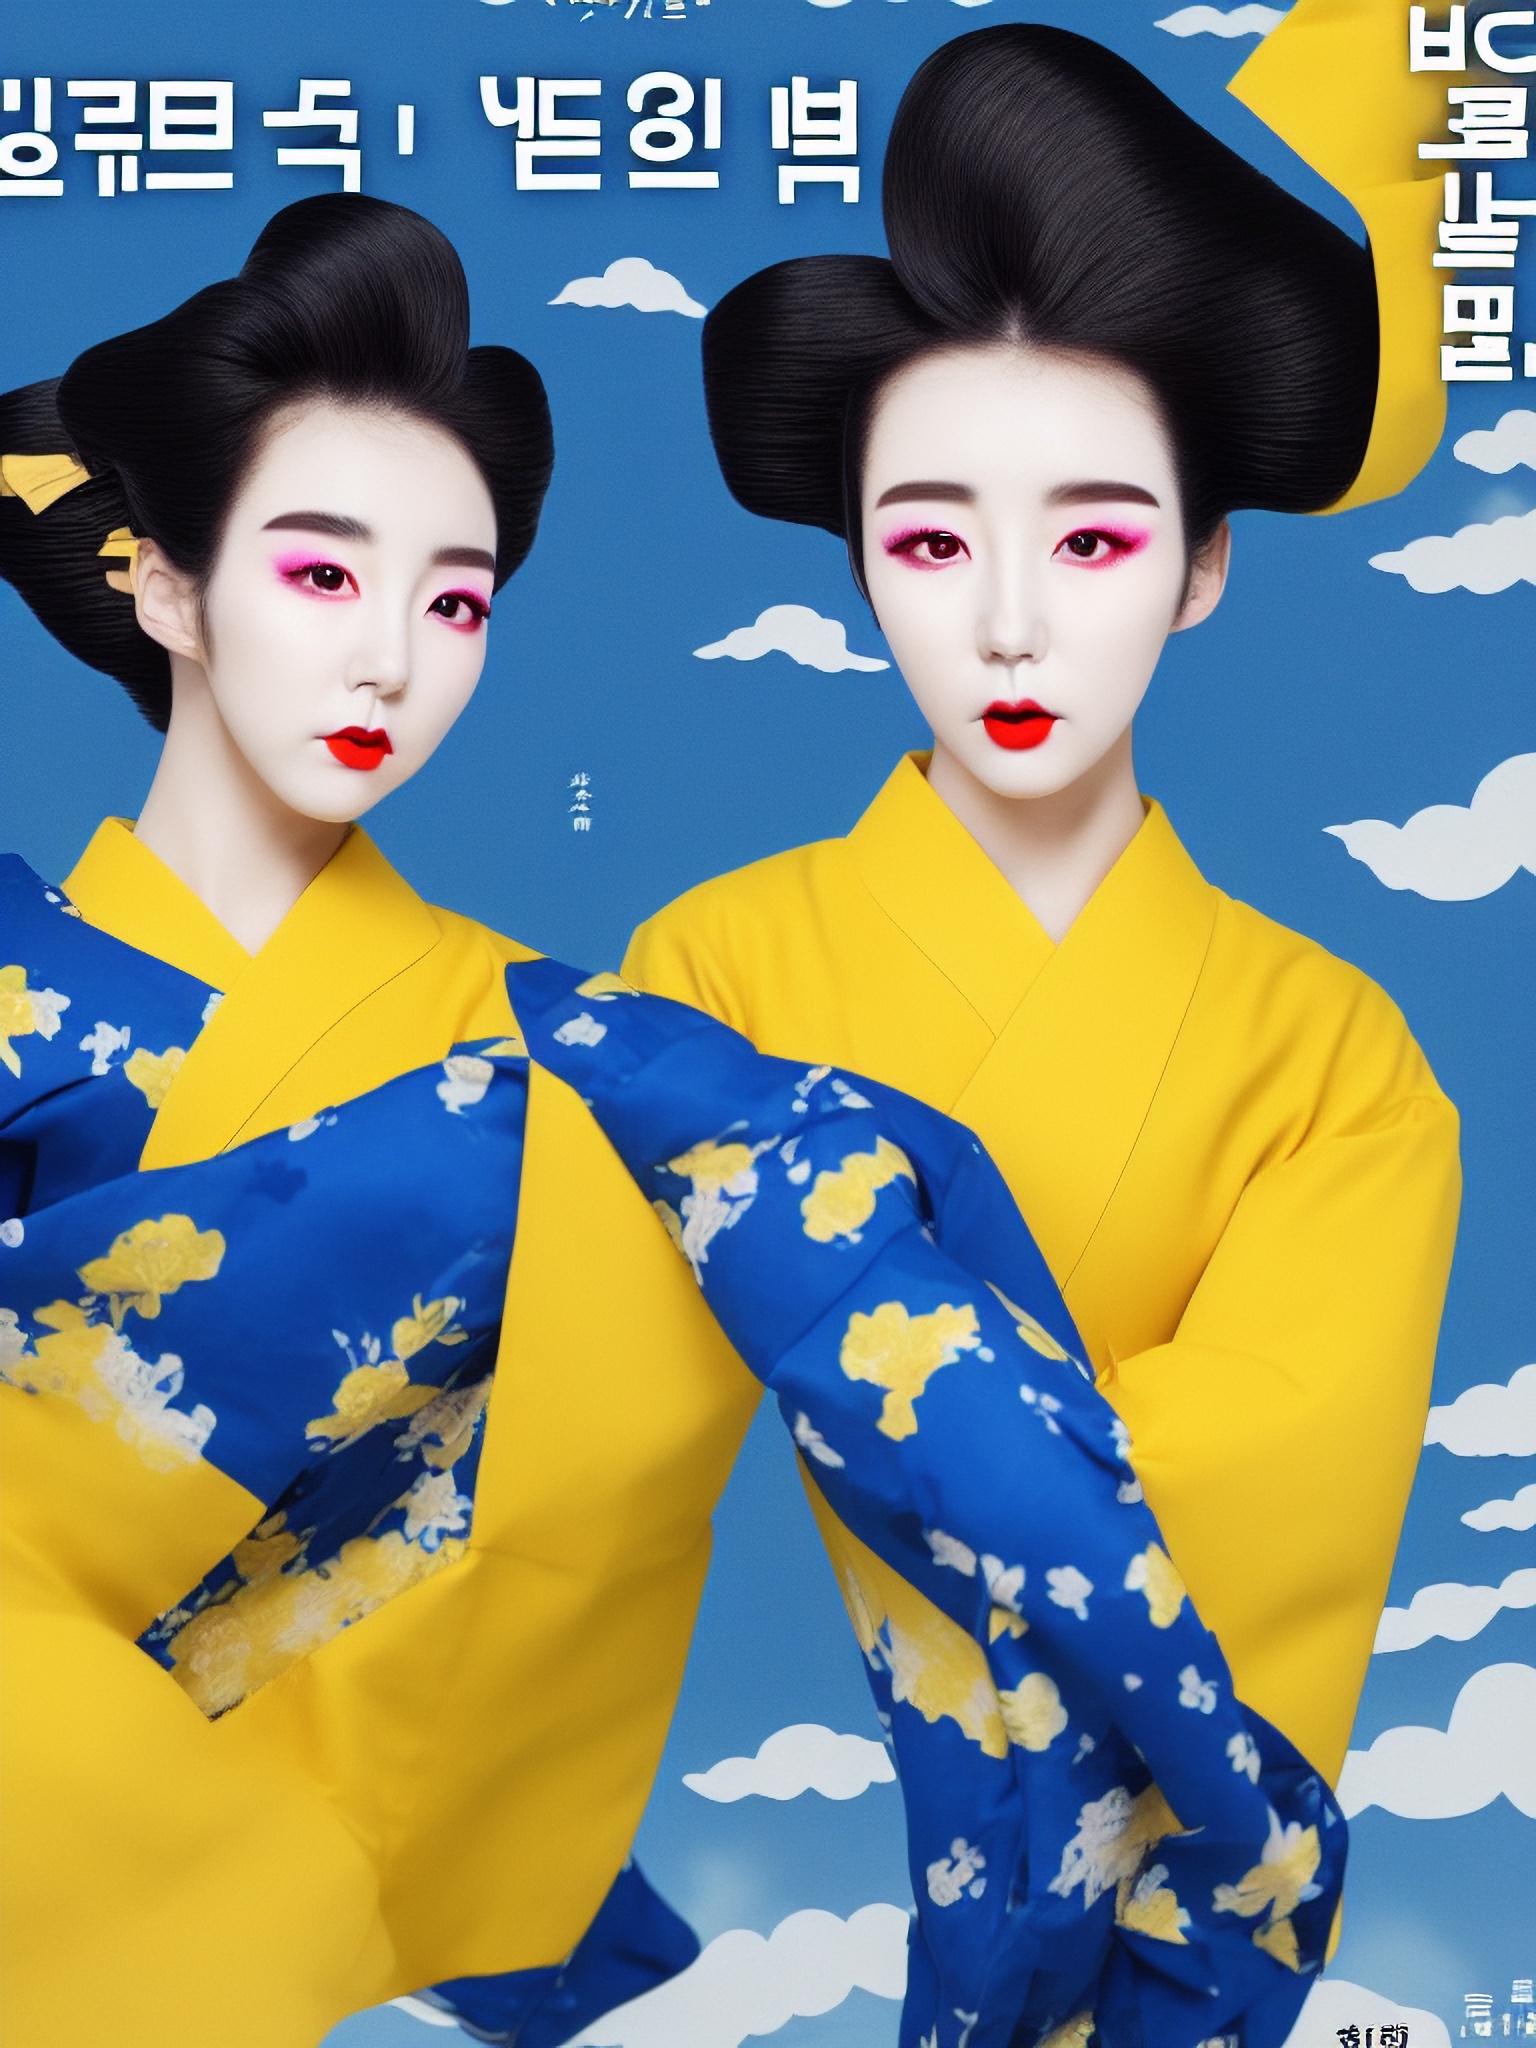 asian-poster-design-yellow-blue-model-fashion-1